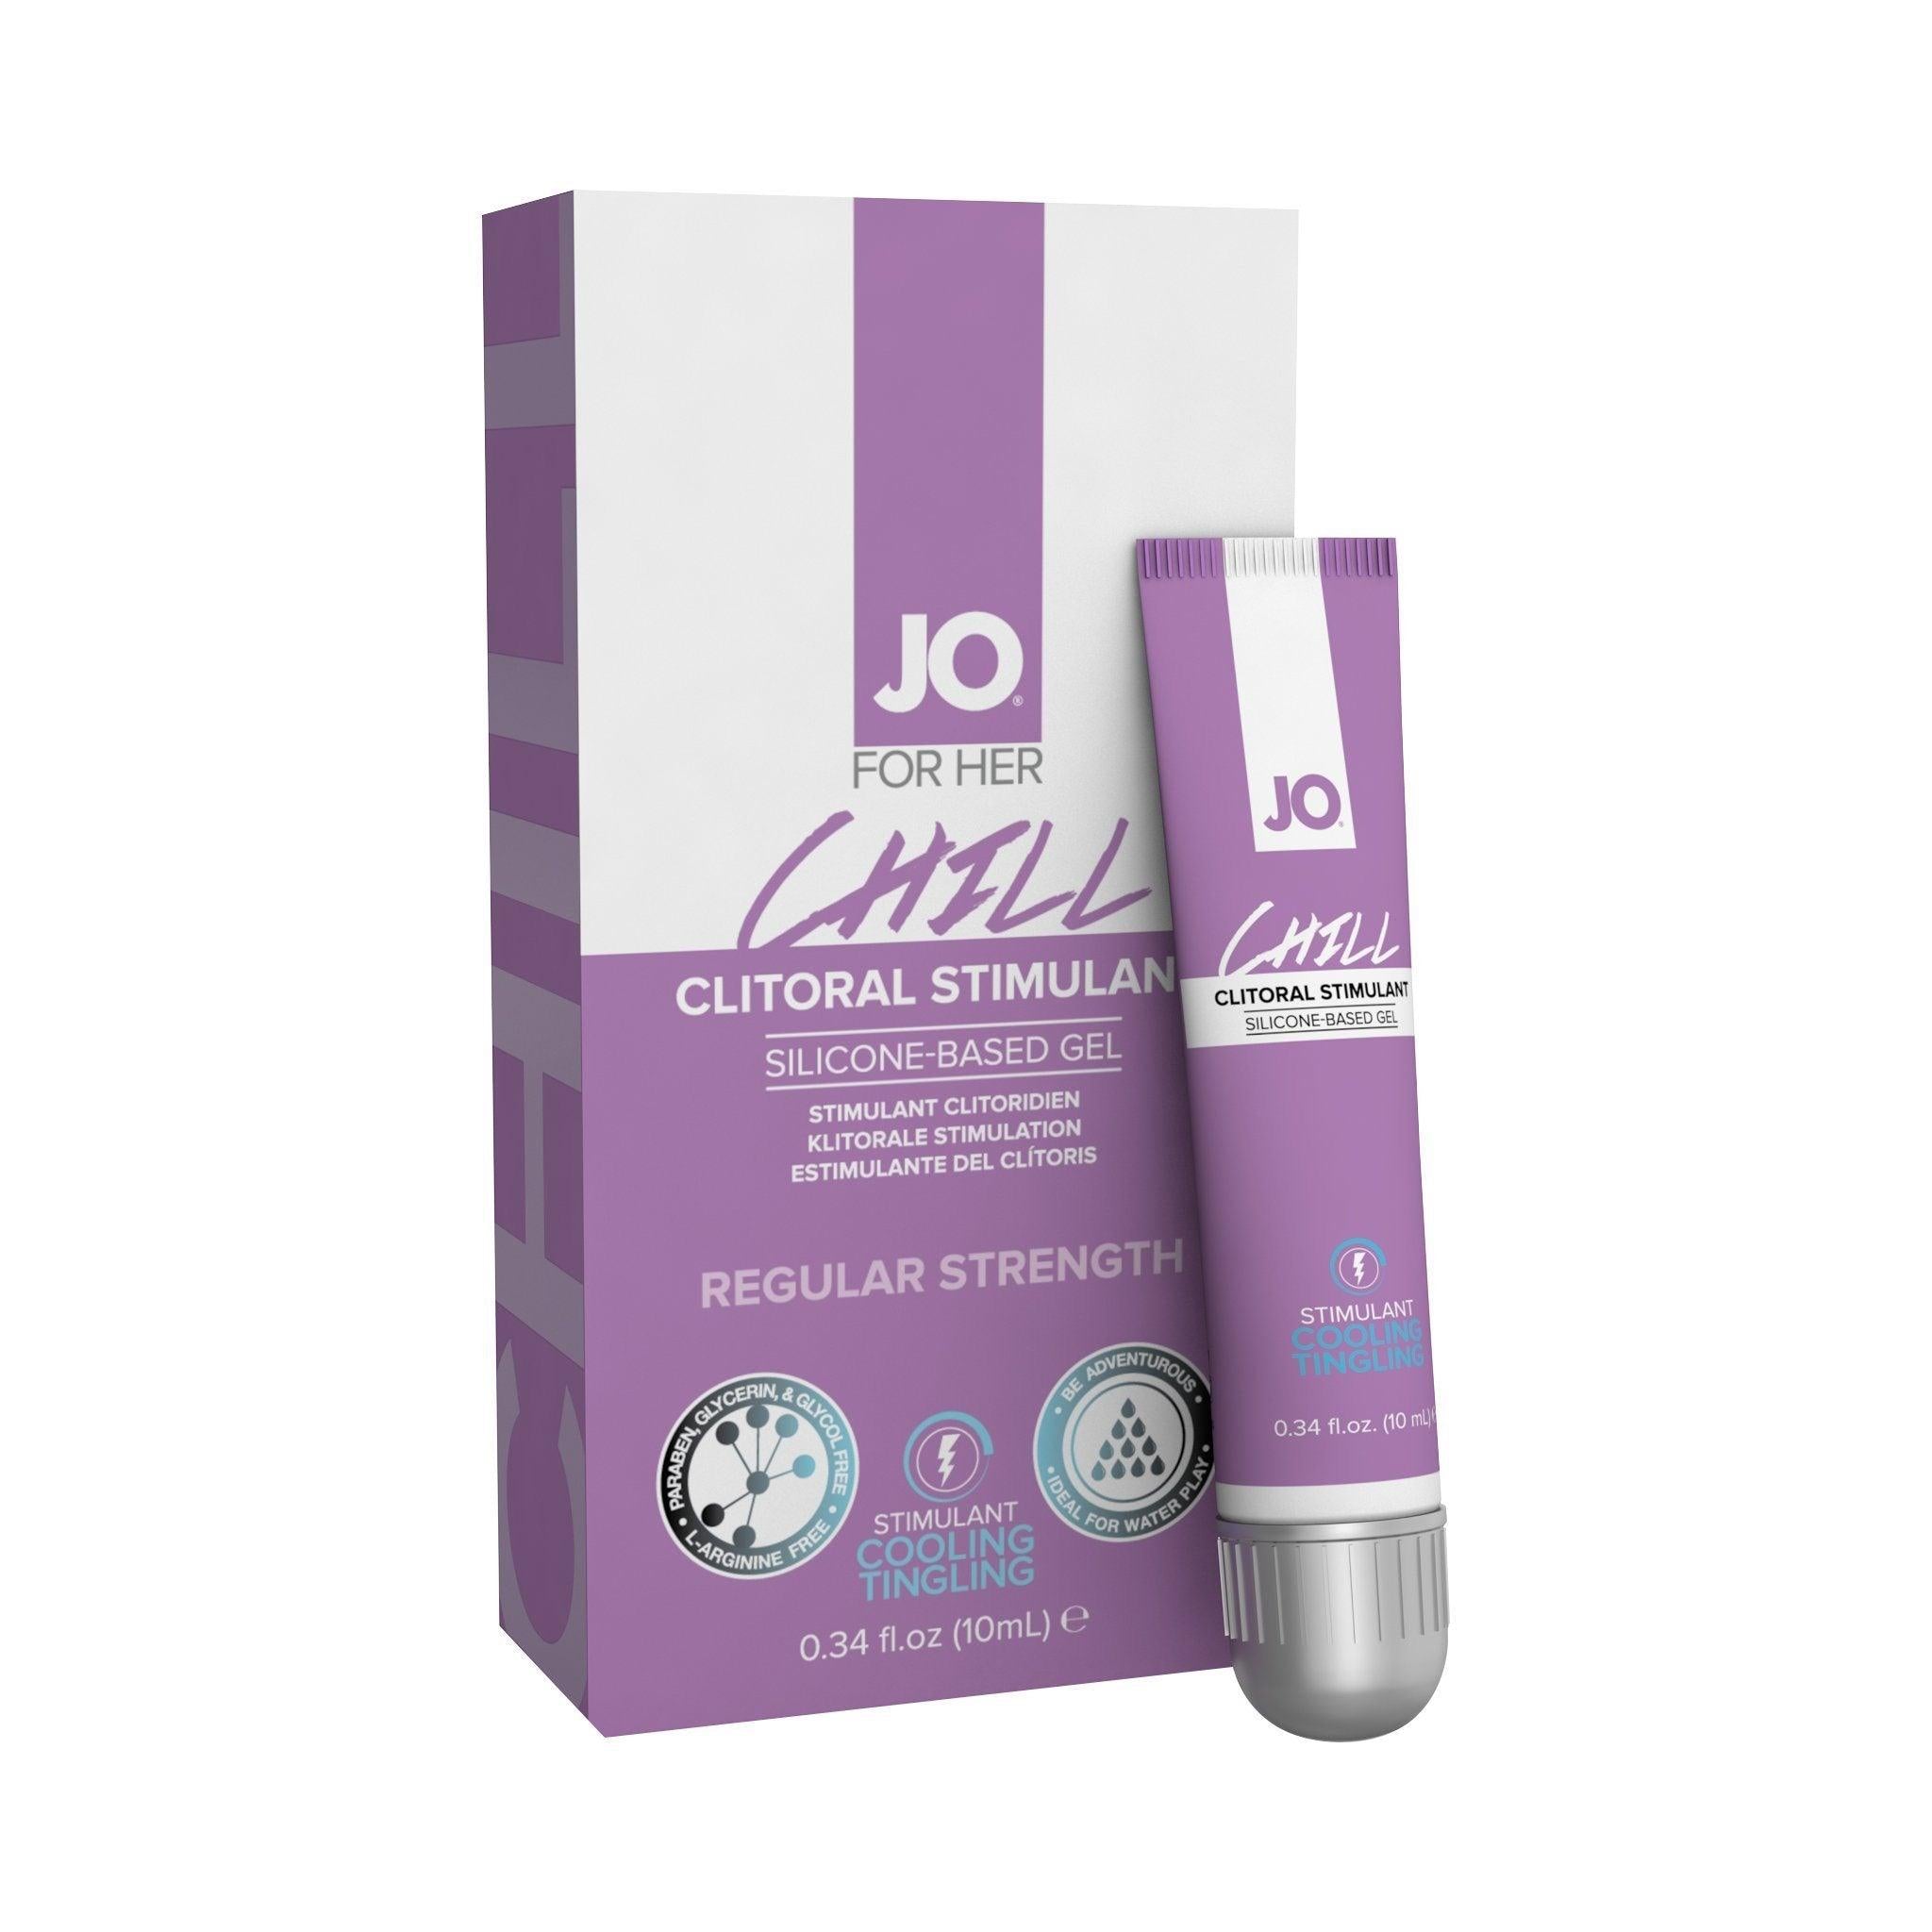 Jo Chill Clitoral Stimulant Cooling & Tingling Regular Strength 0.34 oz (10 mL) - CheapLubes.com